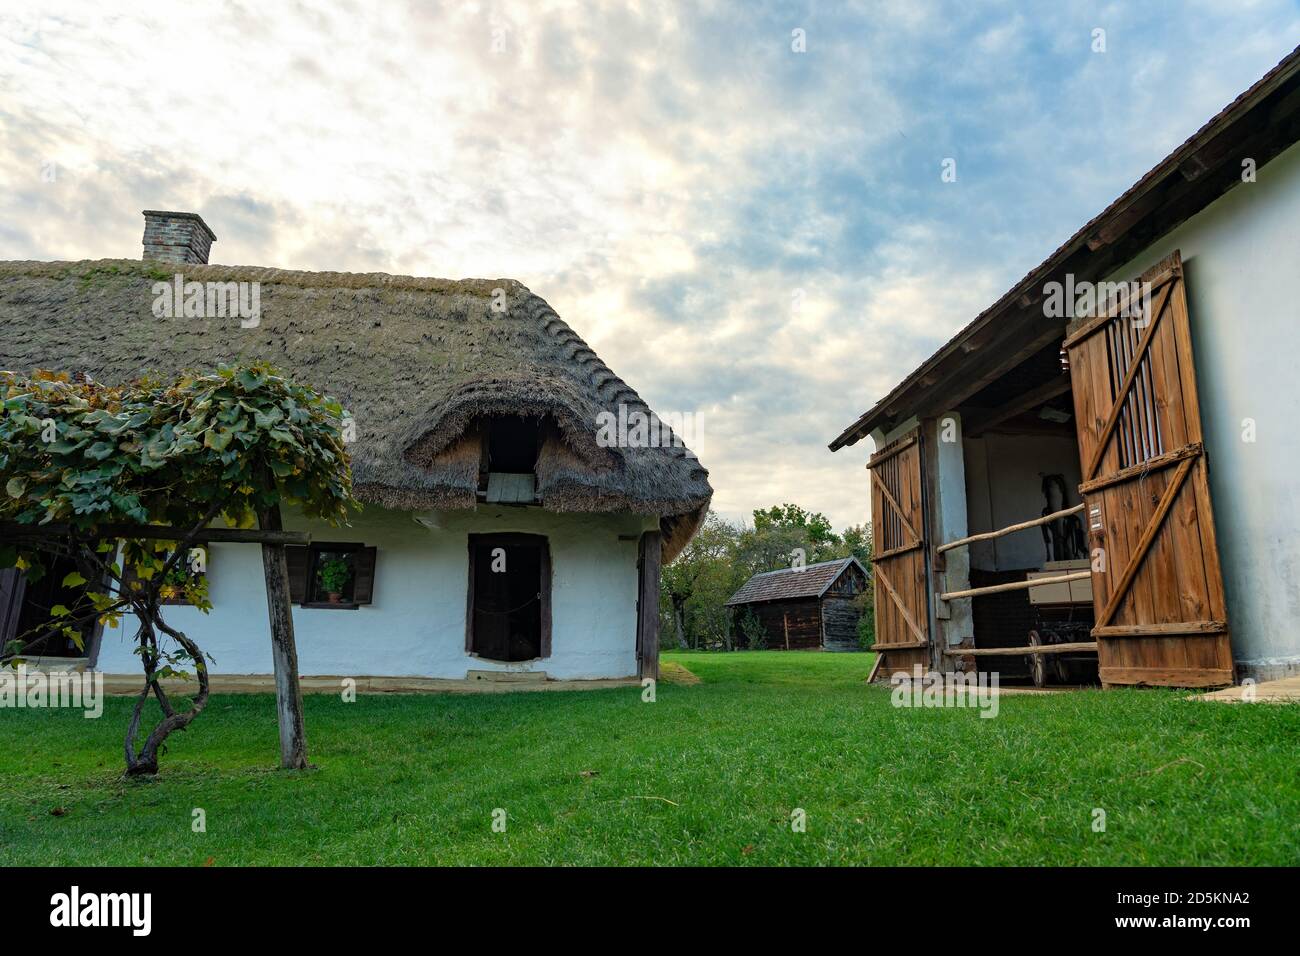 Pityerszer landscape old traditional village in Őrség Hungary Stock Photo